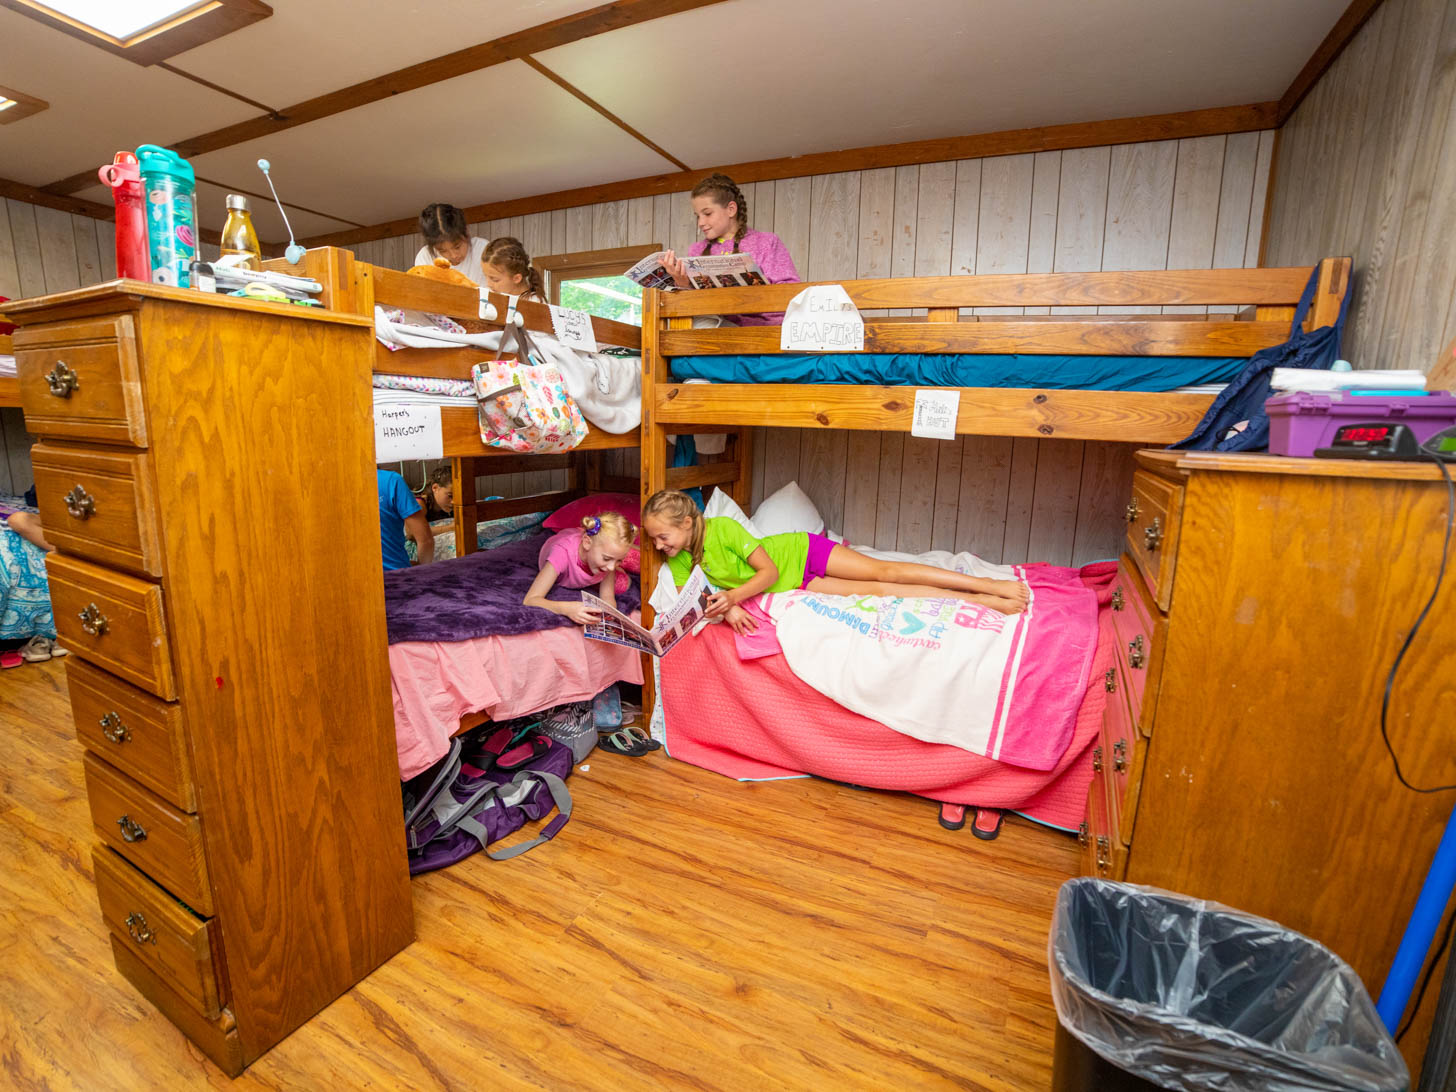 Summer Camp Cabins International, Gymnastics Bunk Bed